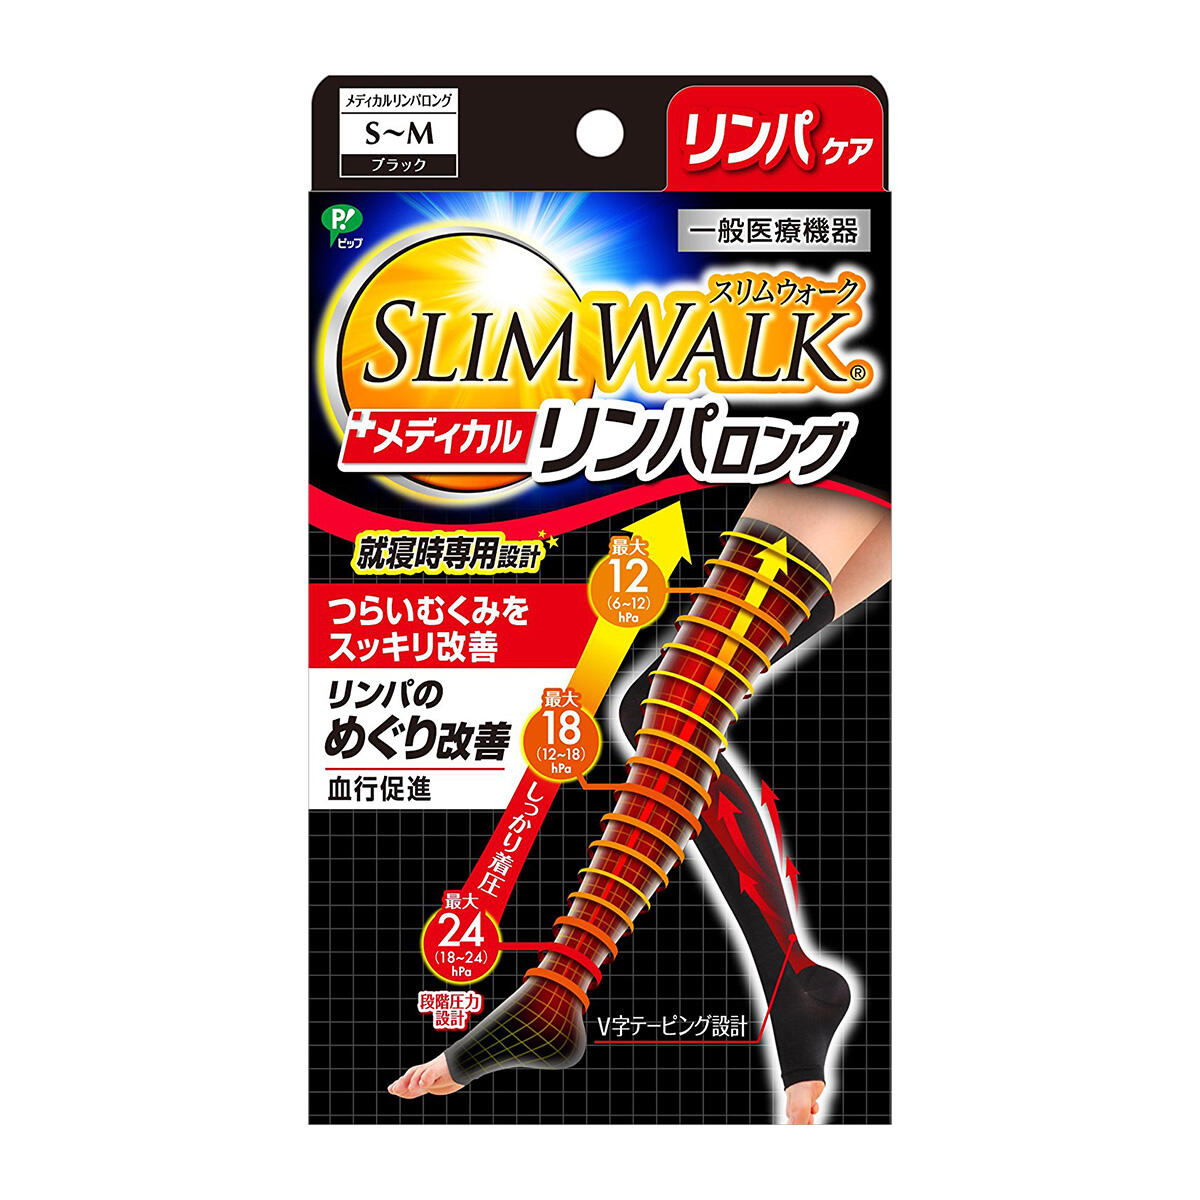 SLIMWALK Japan BeautyActy Burning Shap Pelvis Support Compression Shorts K338 